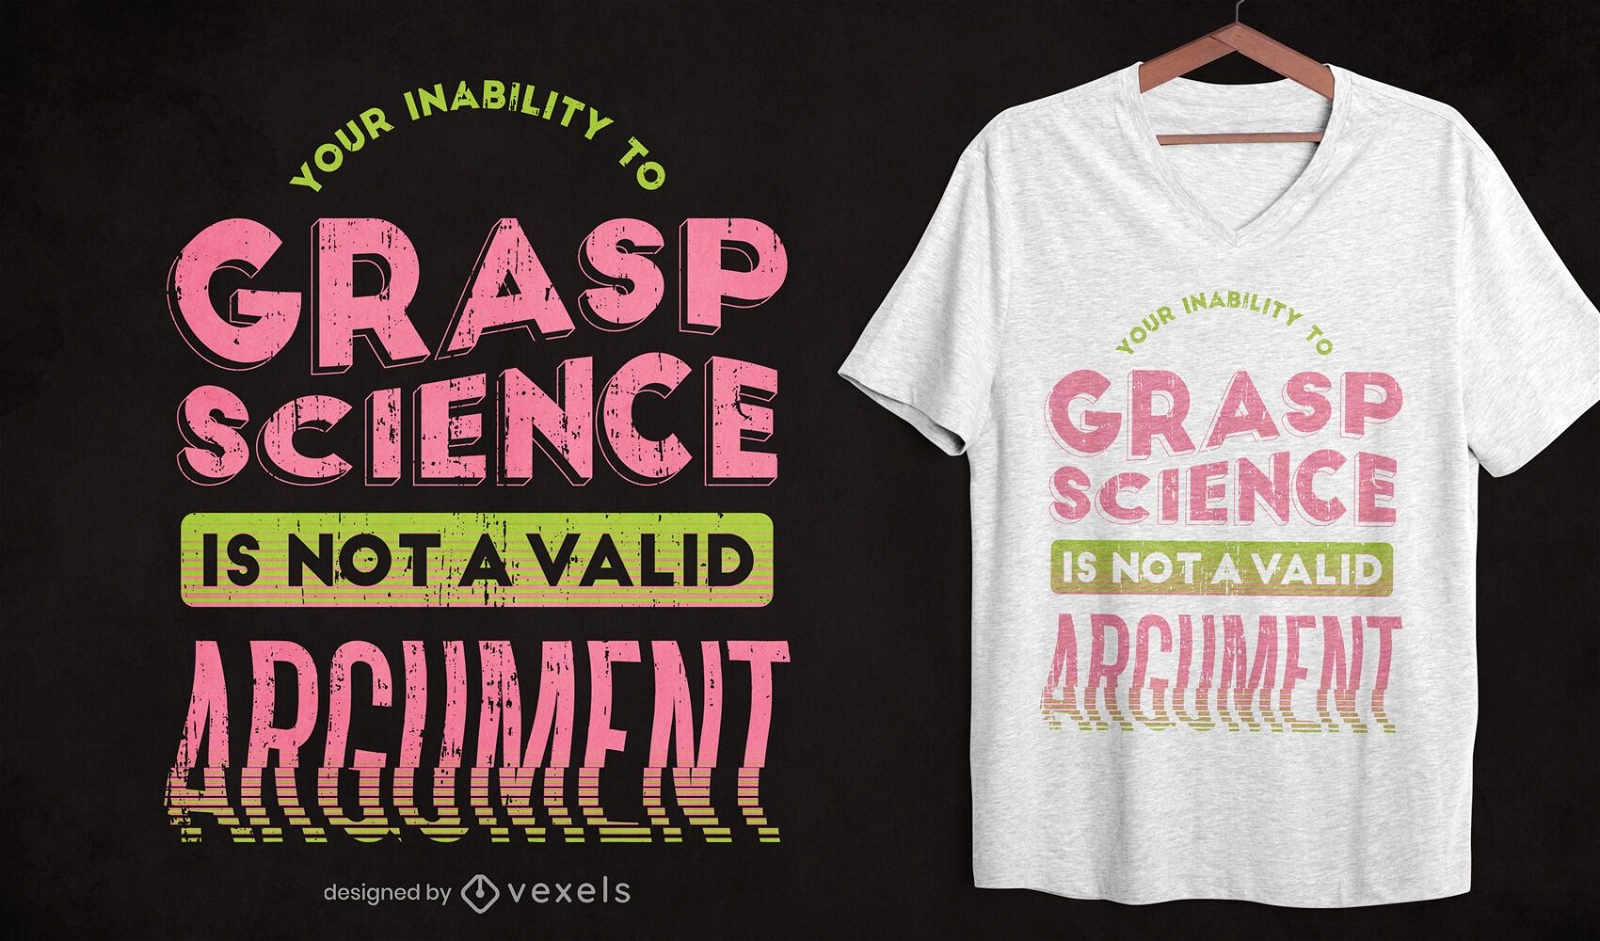 Not a valid argument t-shirt design